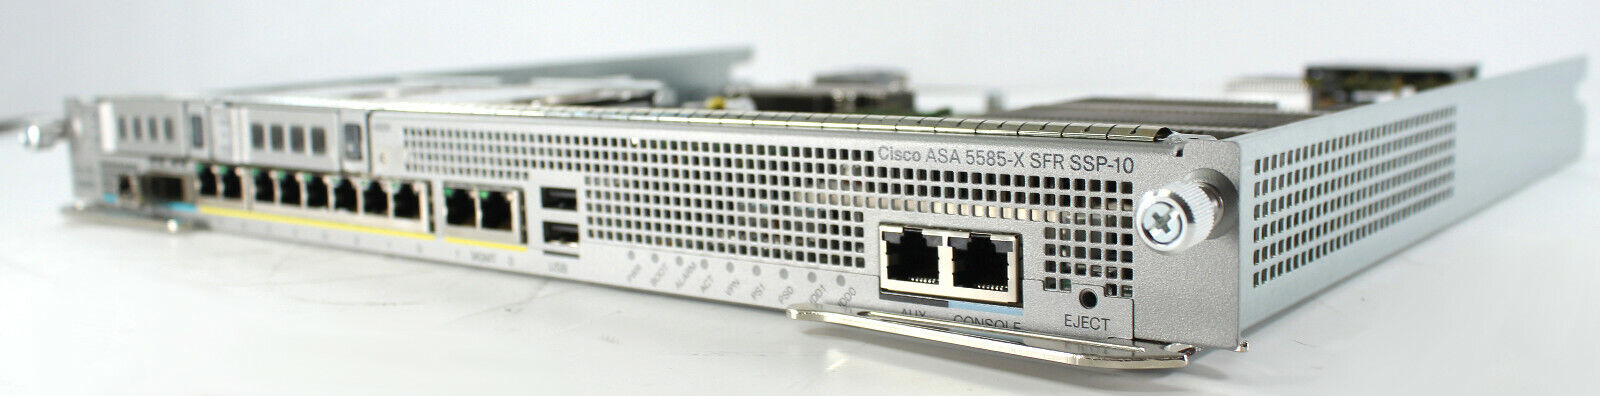 Cisco ASA 5585-X IPS SSP-10 Firewall Module 6GB RAM 2x 64MB HDDs